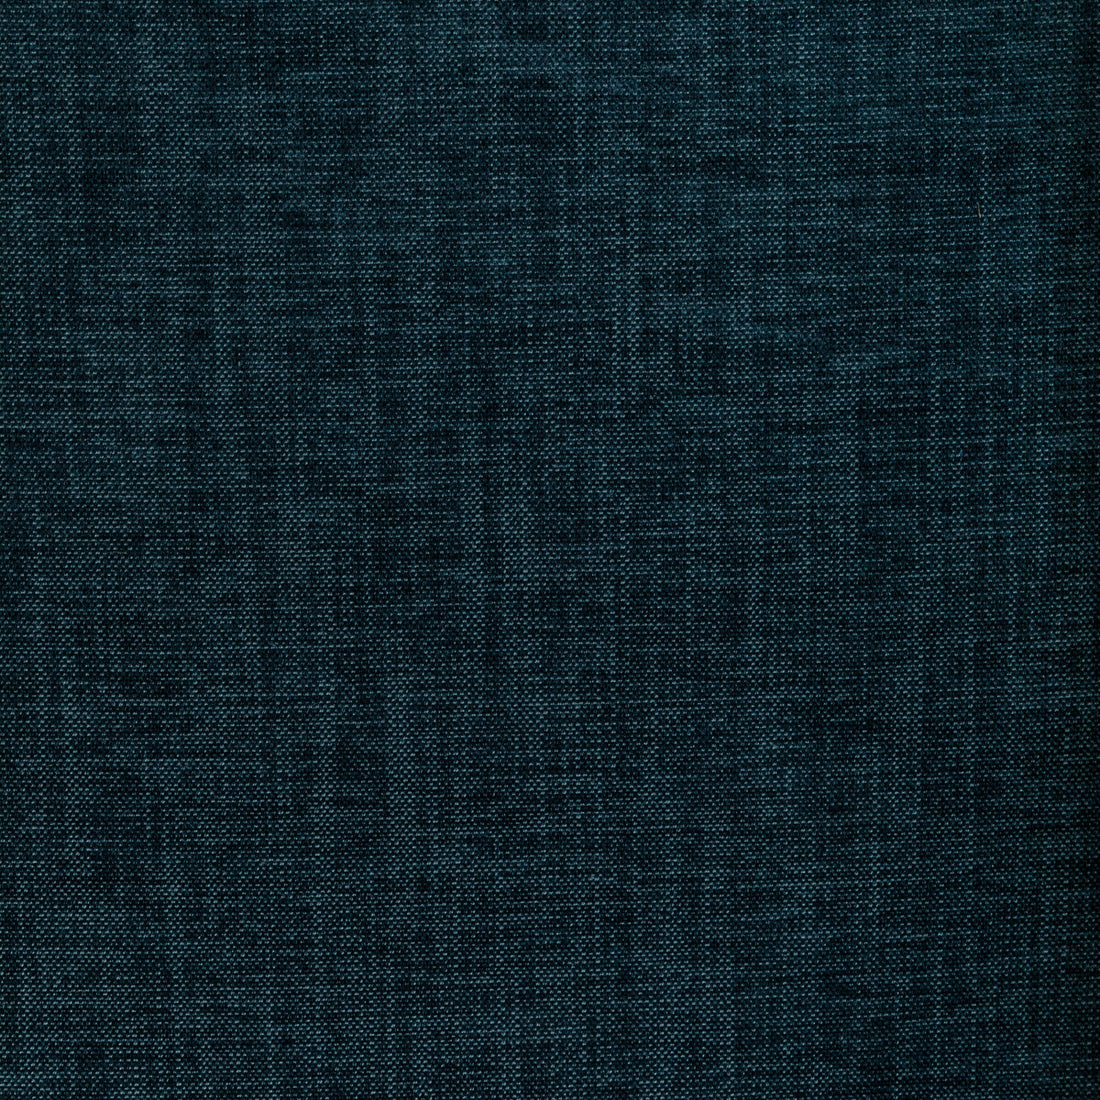 Kravet Smart fabric in 36650-55 color - pattern 36650.55.0 - by Kravet Smart in the Performance Kravetarmor collection